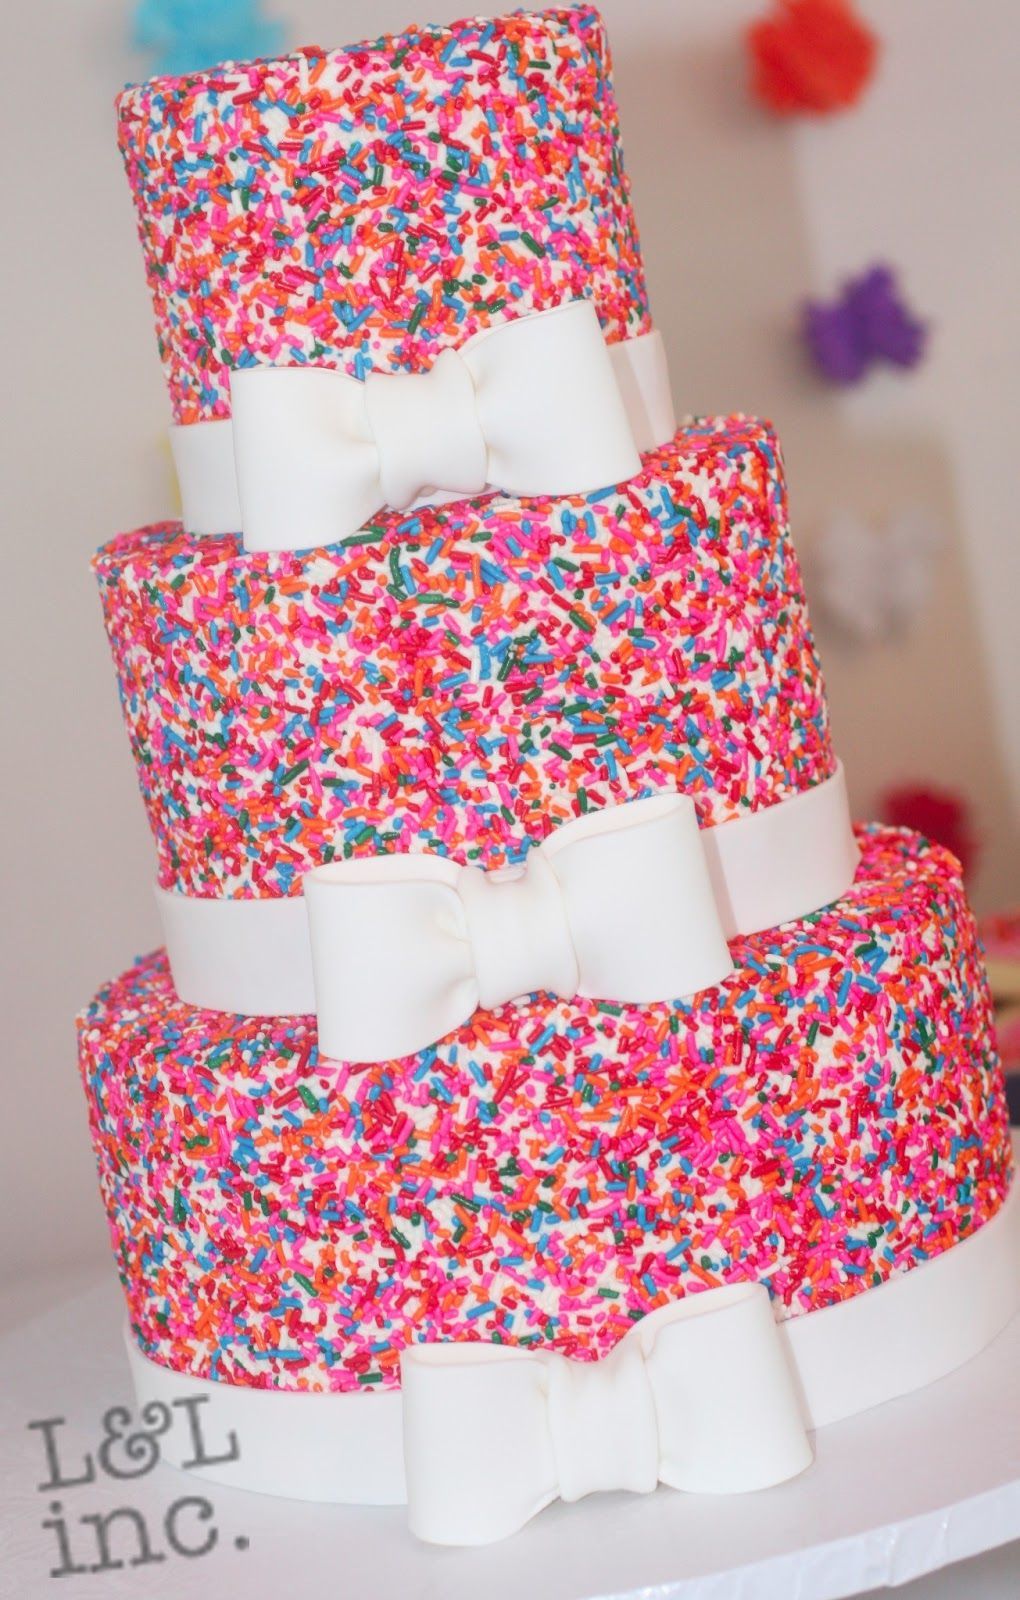 birthday cakes for teen gir